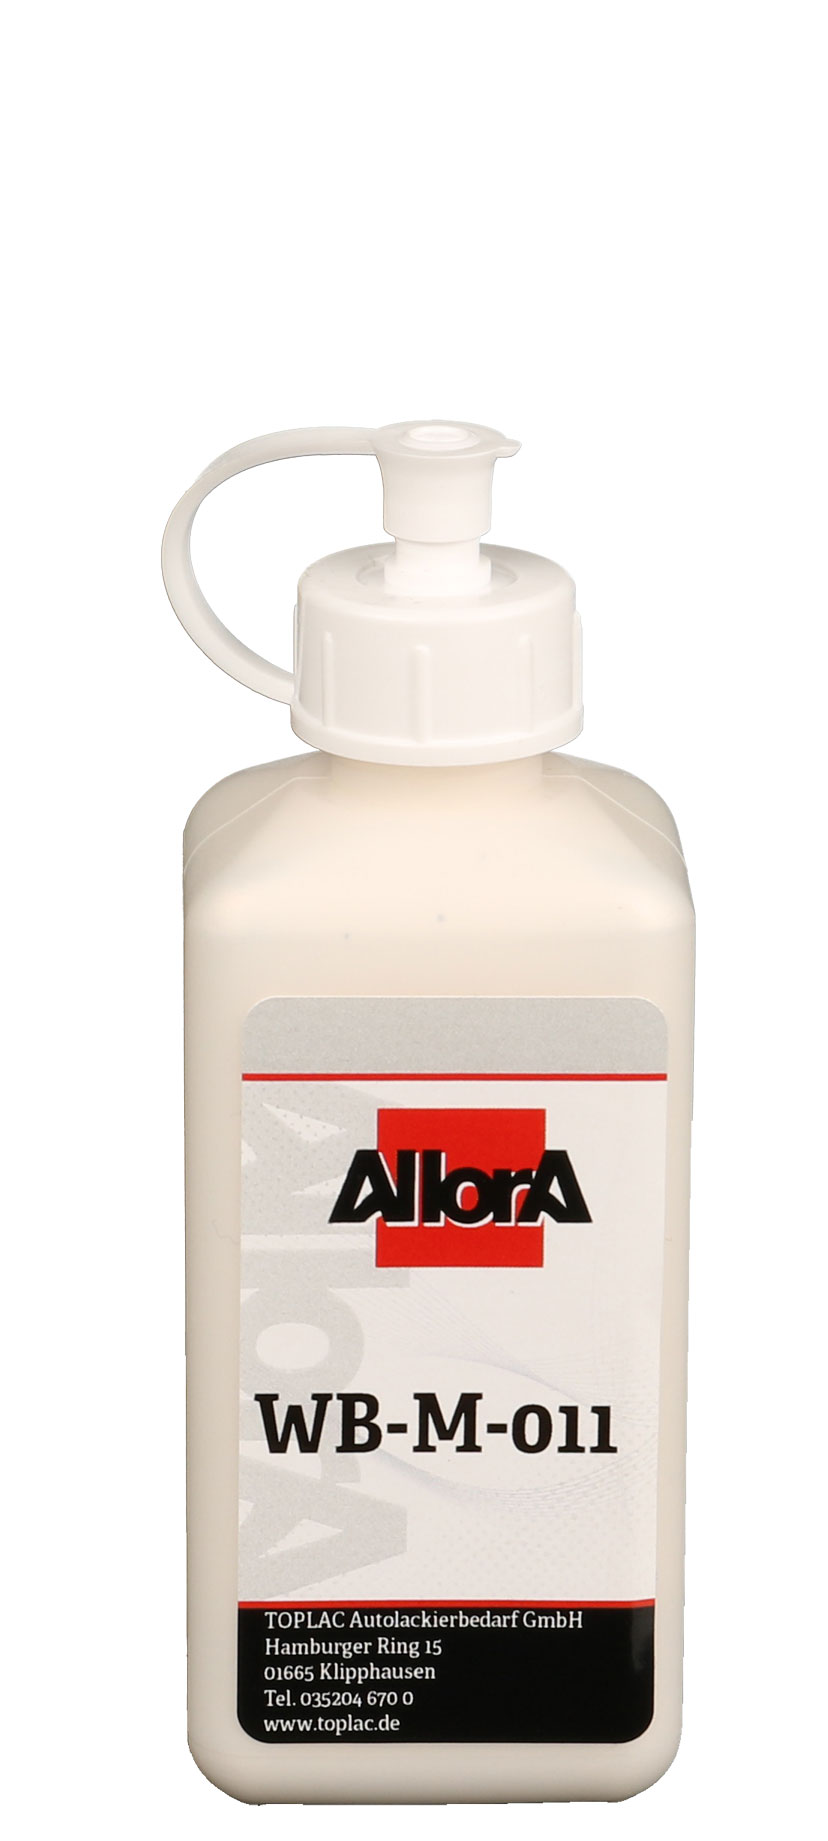 AllorA Basisfarbe WB-M-011